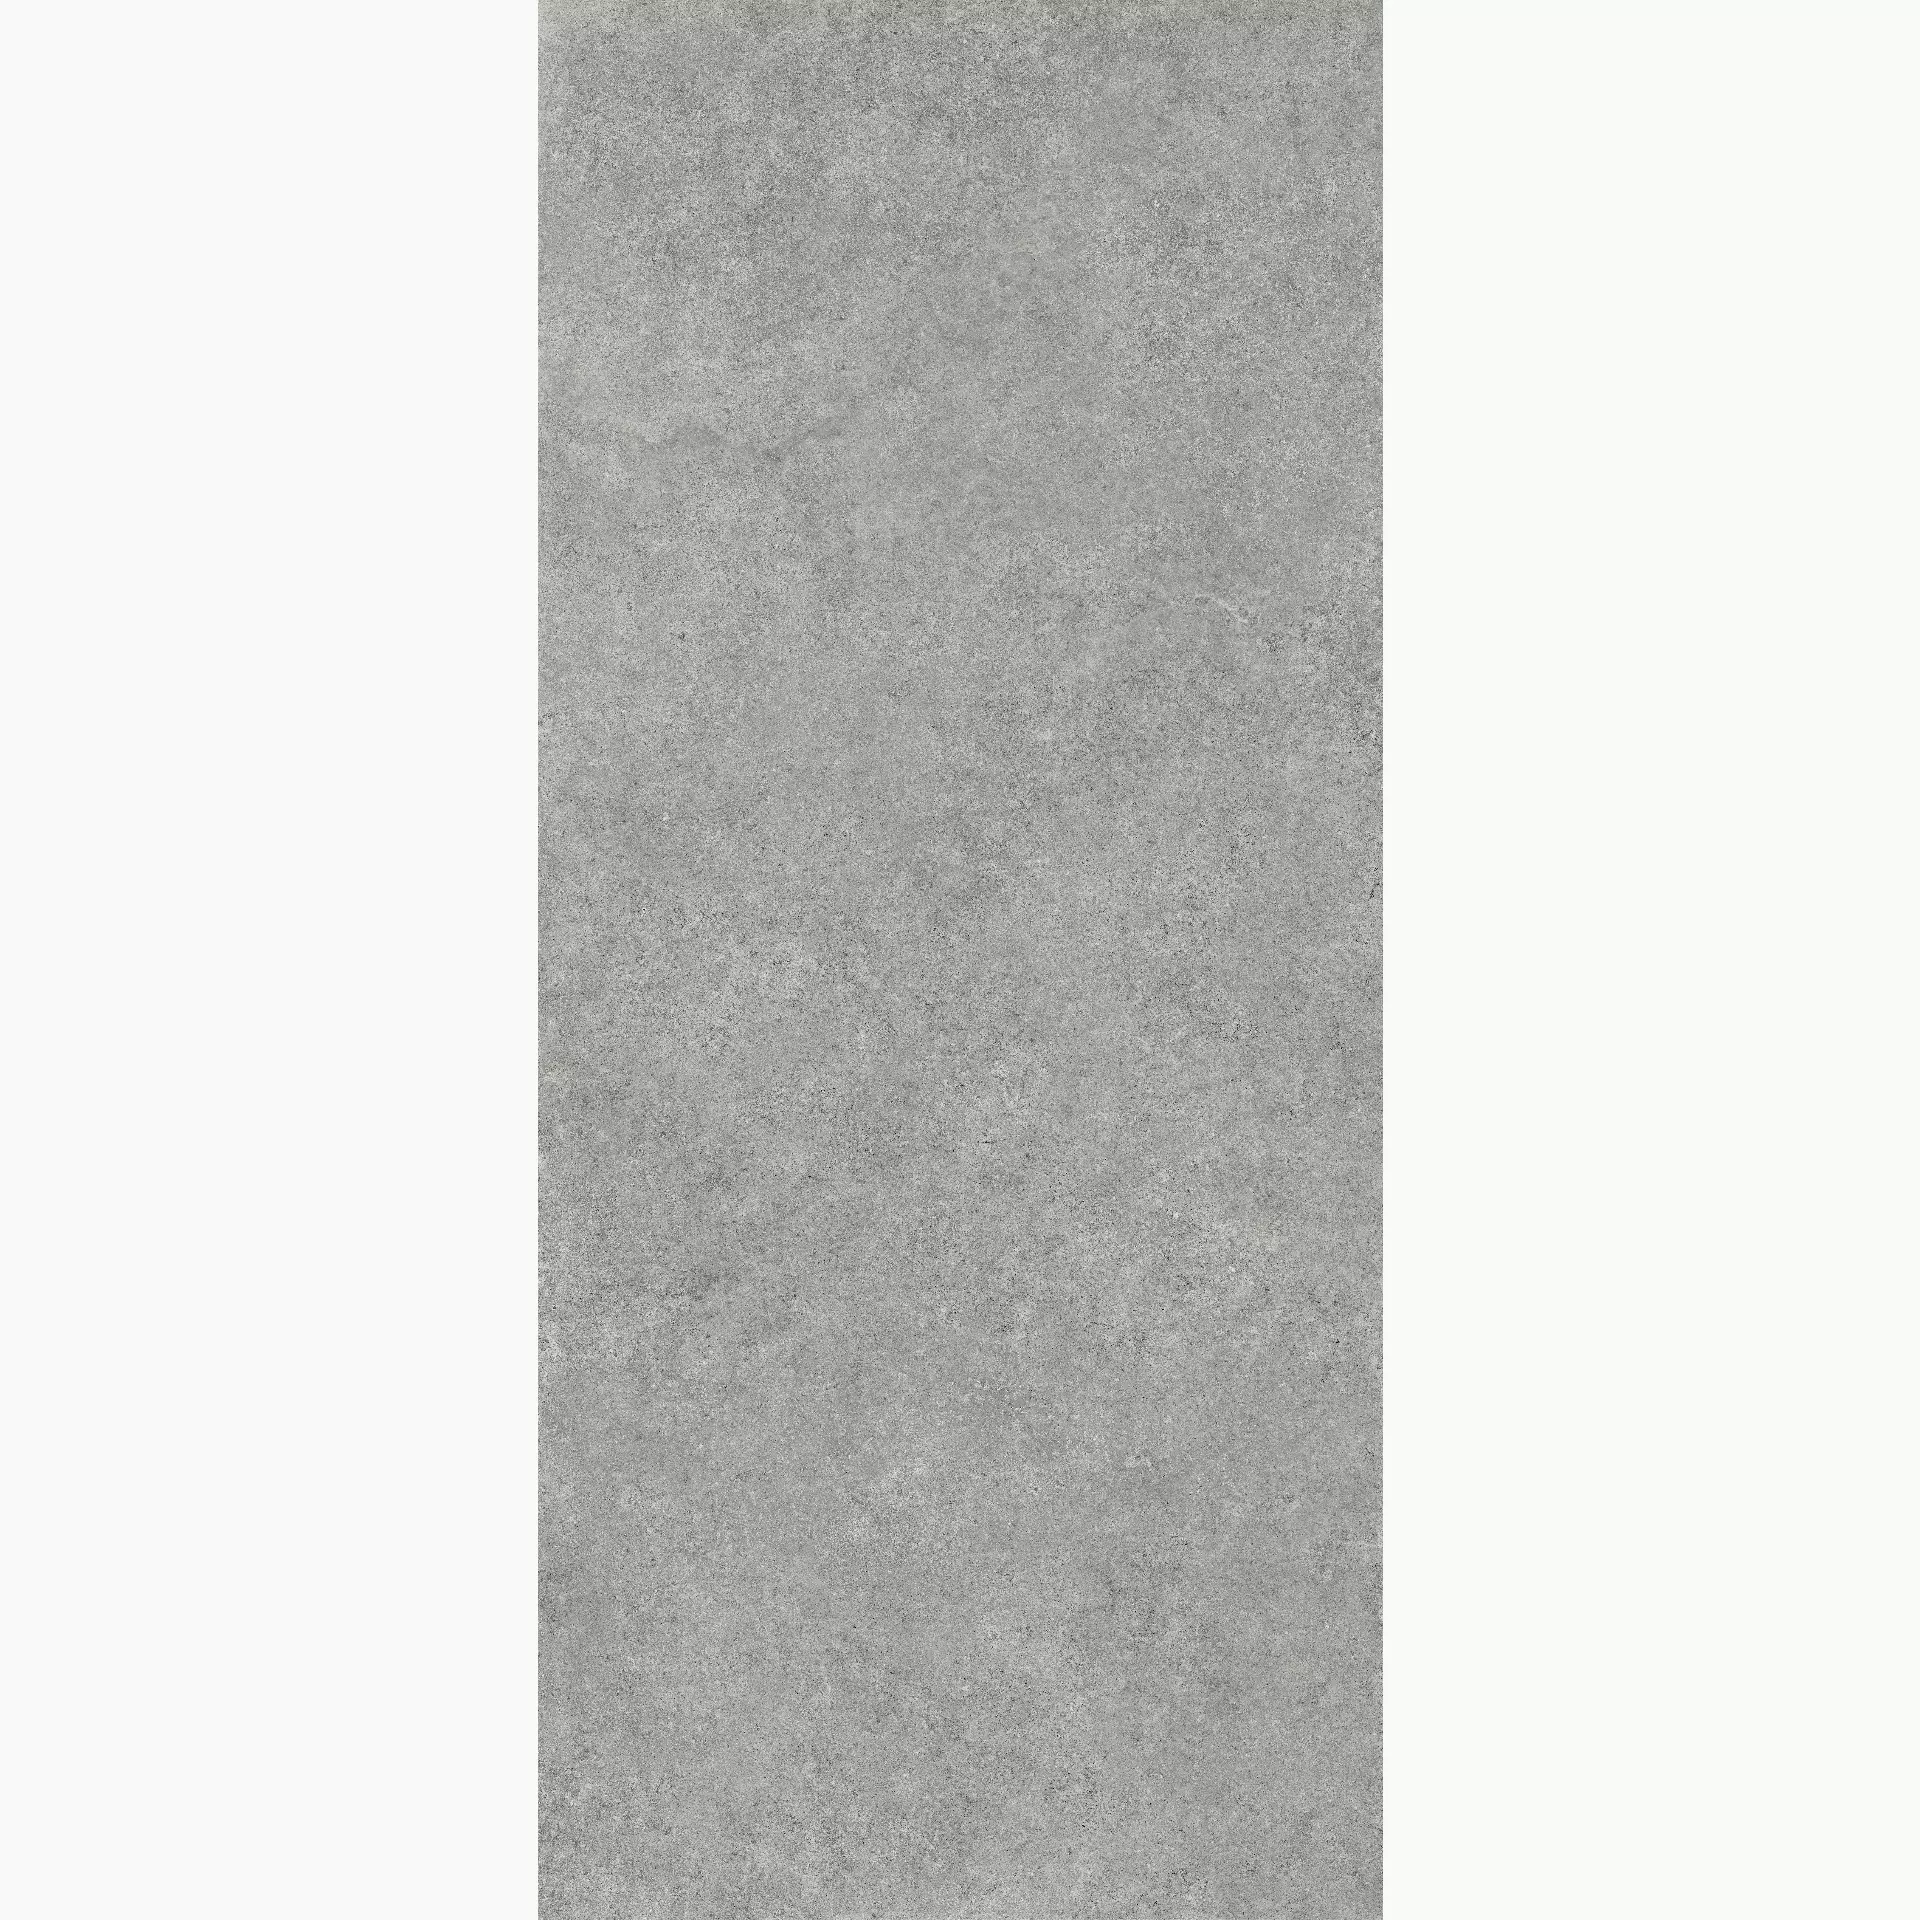 Cottodeste Kerlite Pura Grey Chiseled Grey EK6PU50 gemeisselt 120x278cm rektifiziert 6,5mm